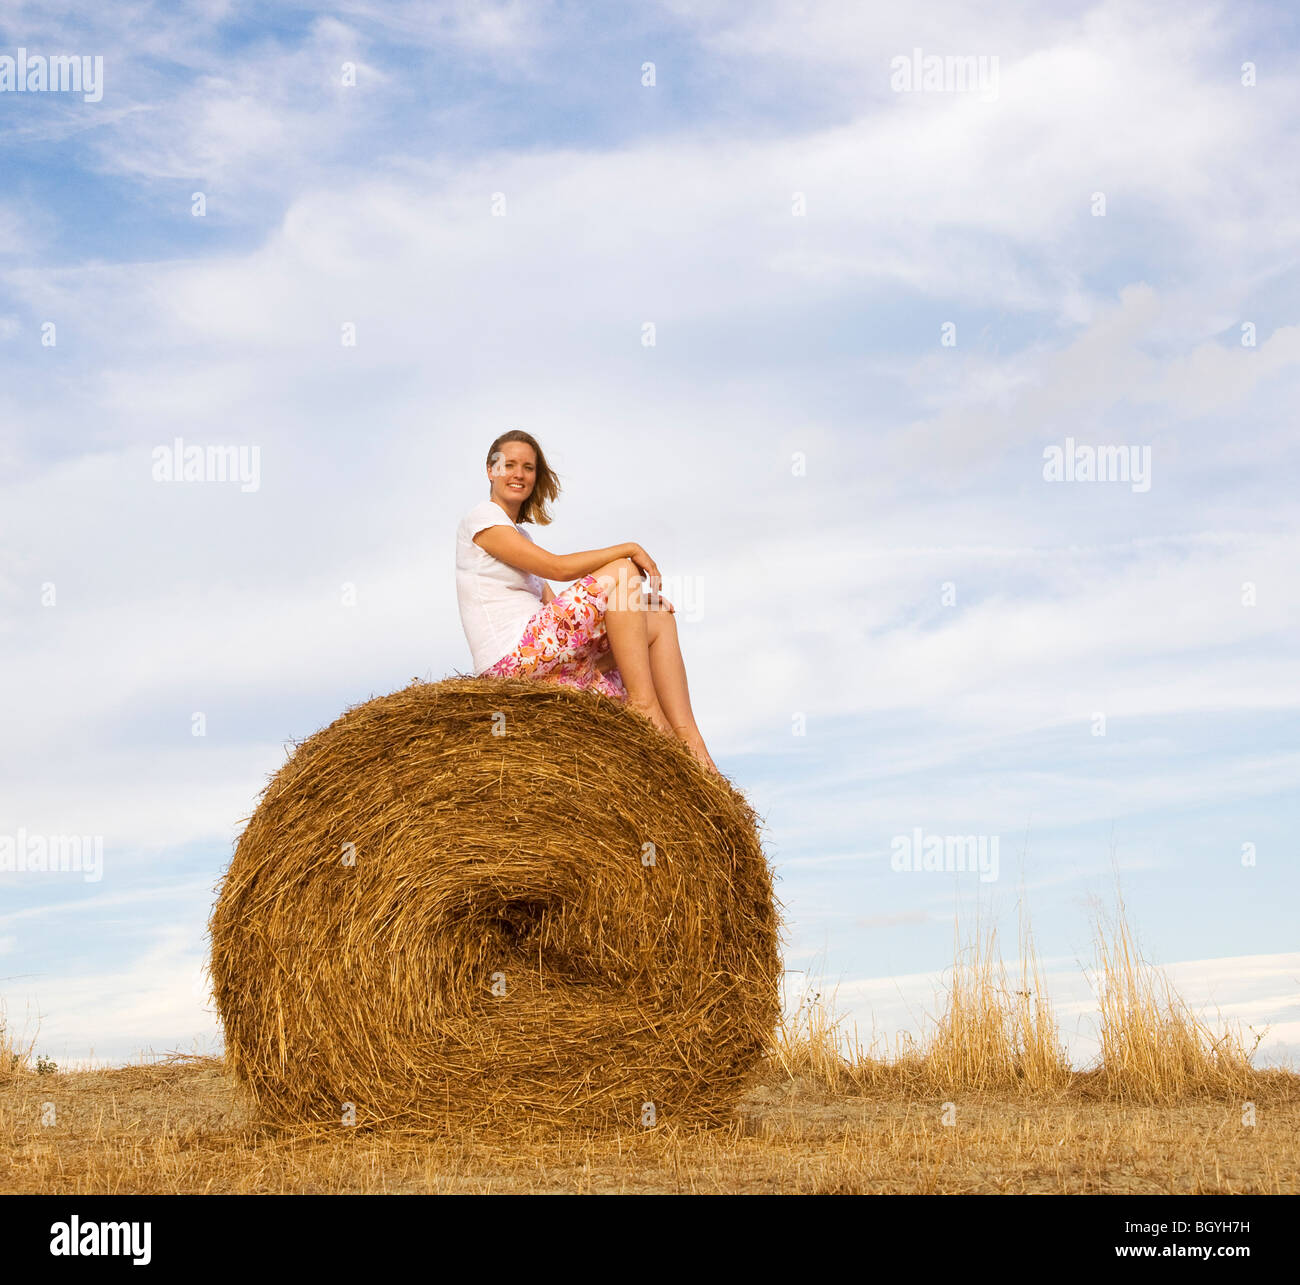 woman sitting on hay bale Stock Photo